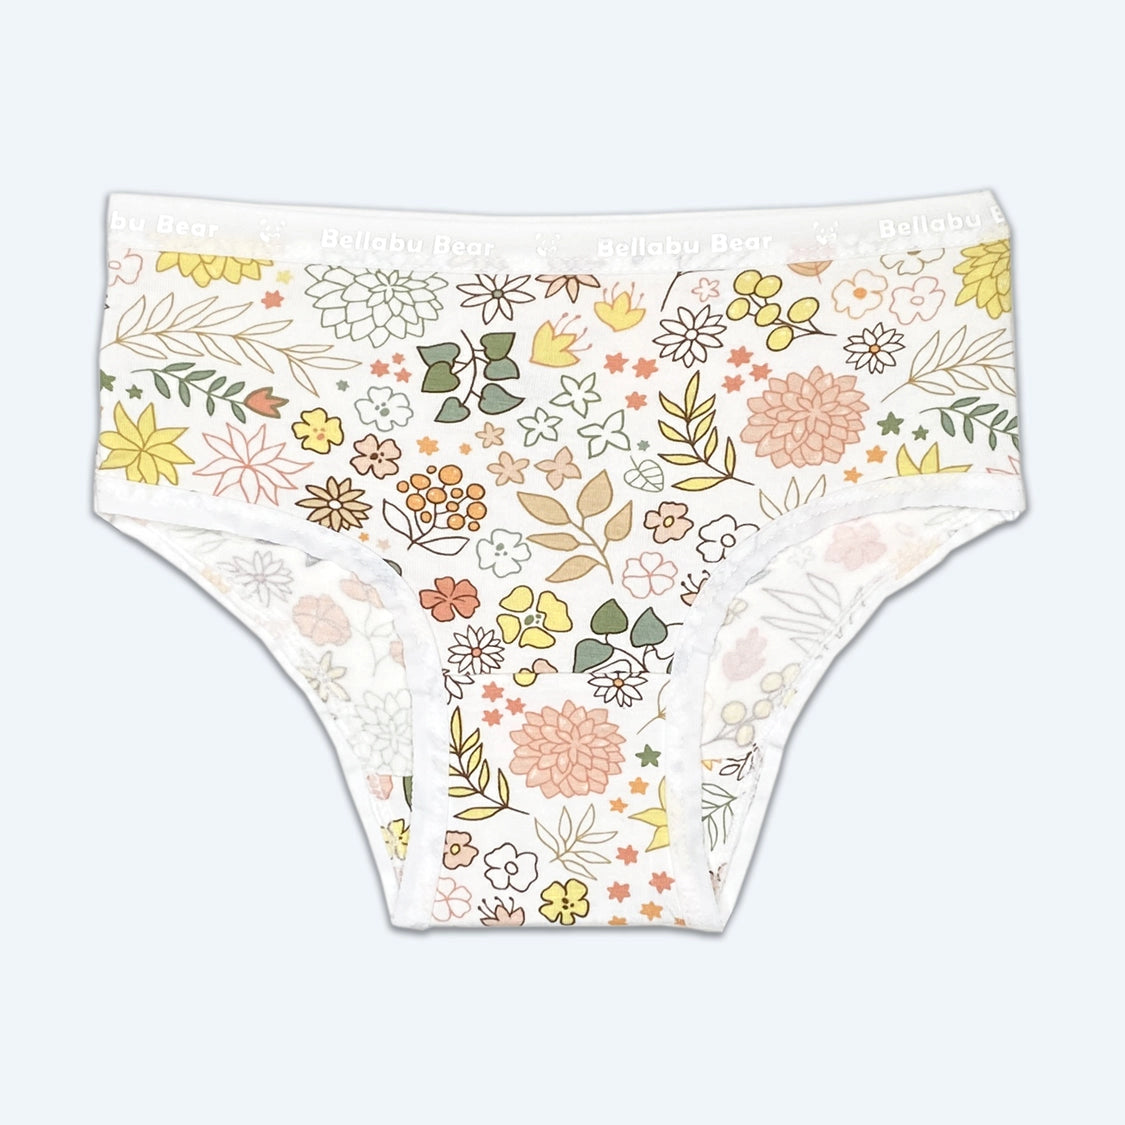 Fall Floral Bamboo Underwear 150 GIRLS APPAREL 2-8 Bellabu Bear 2/3 